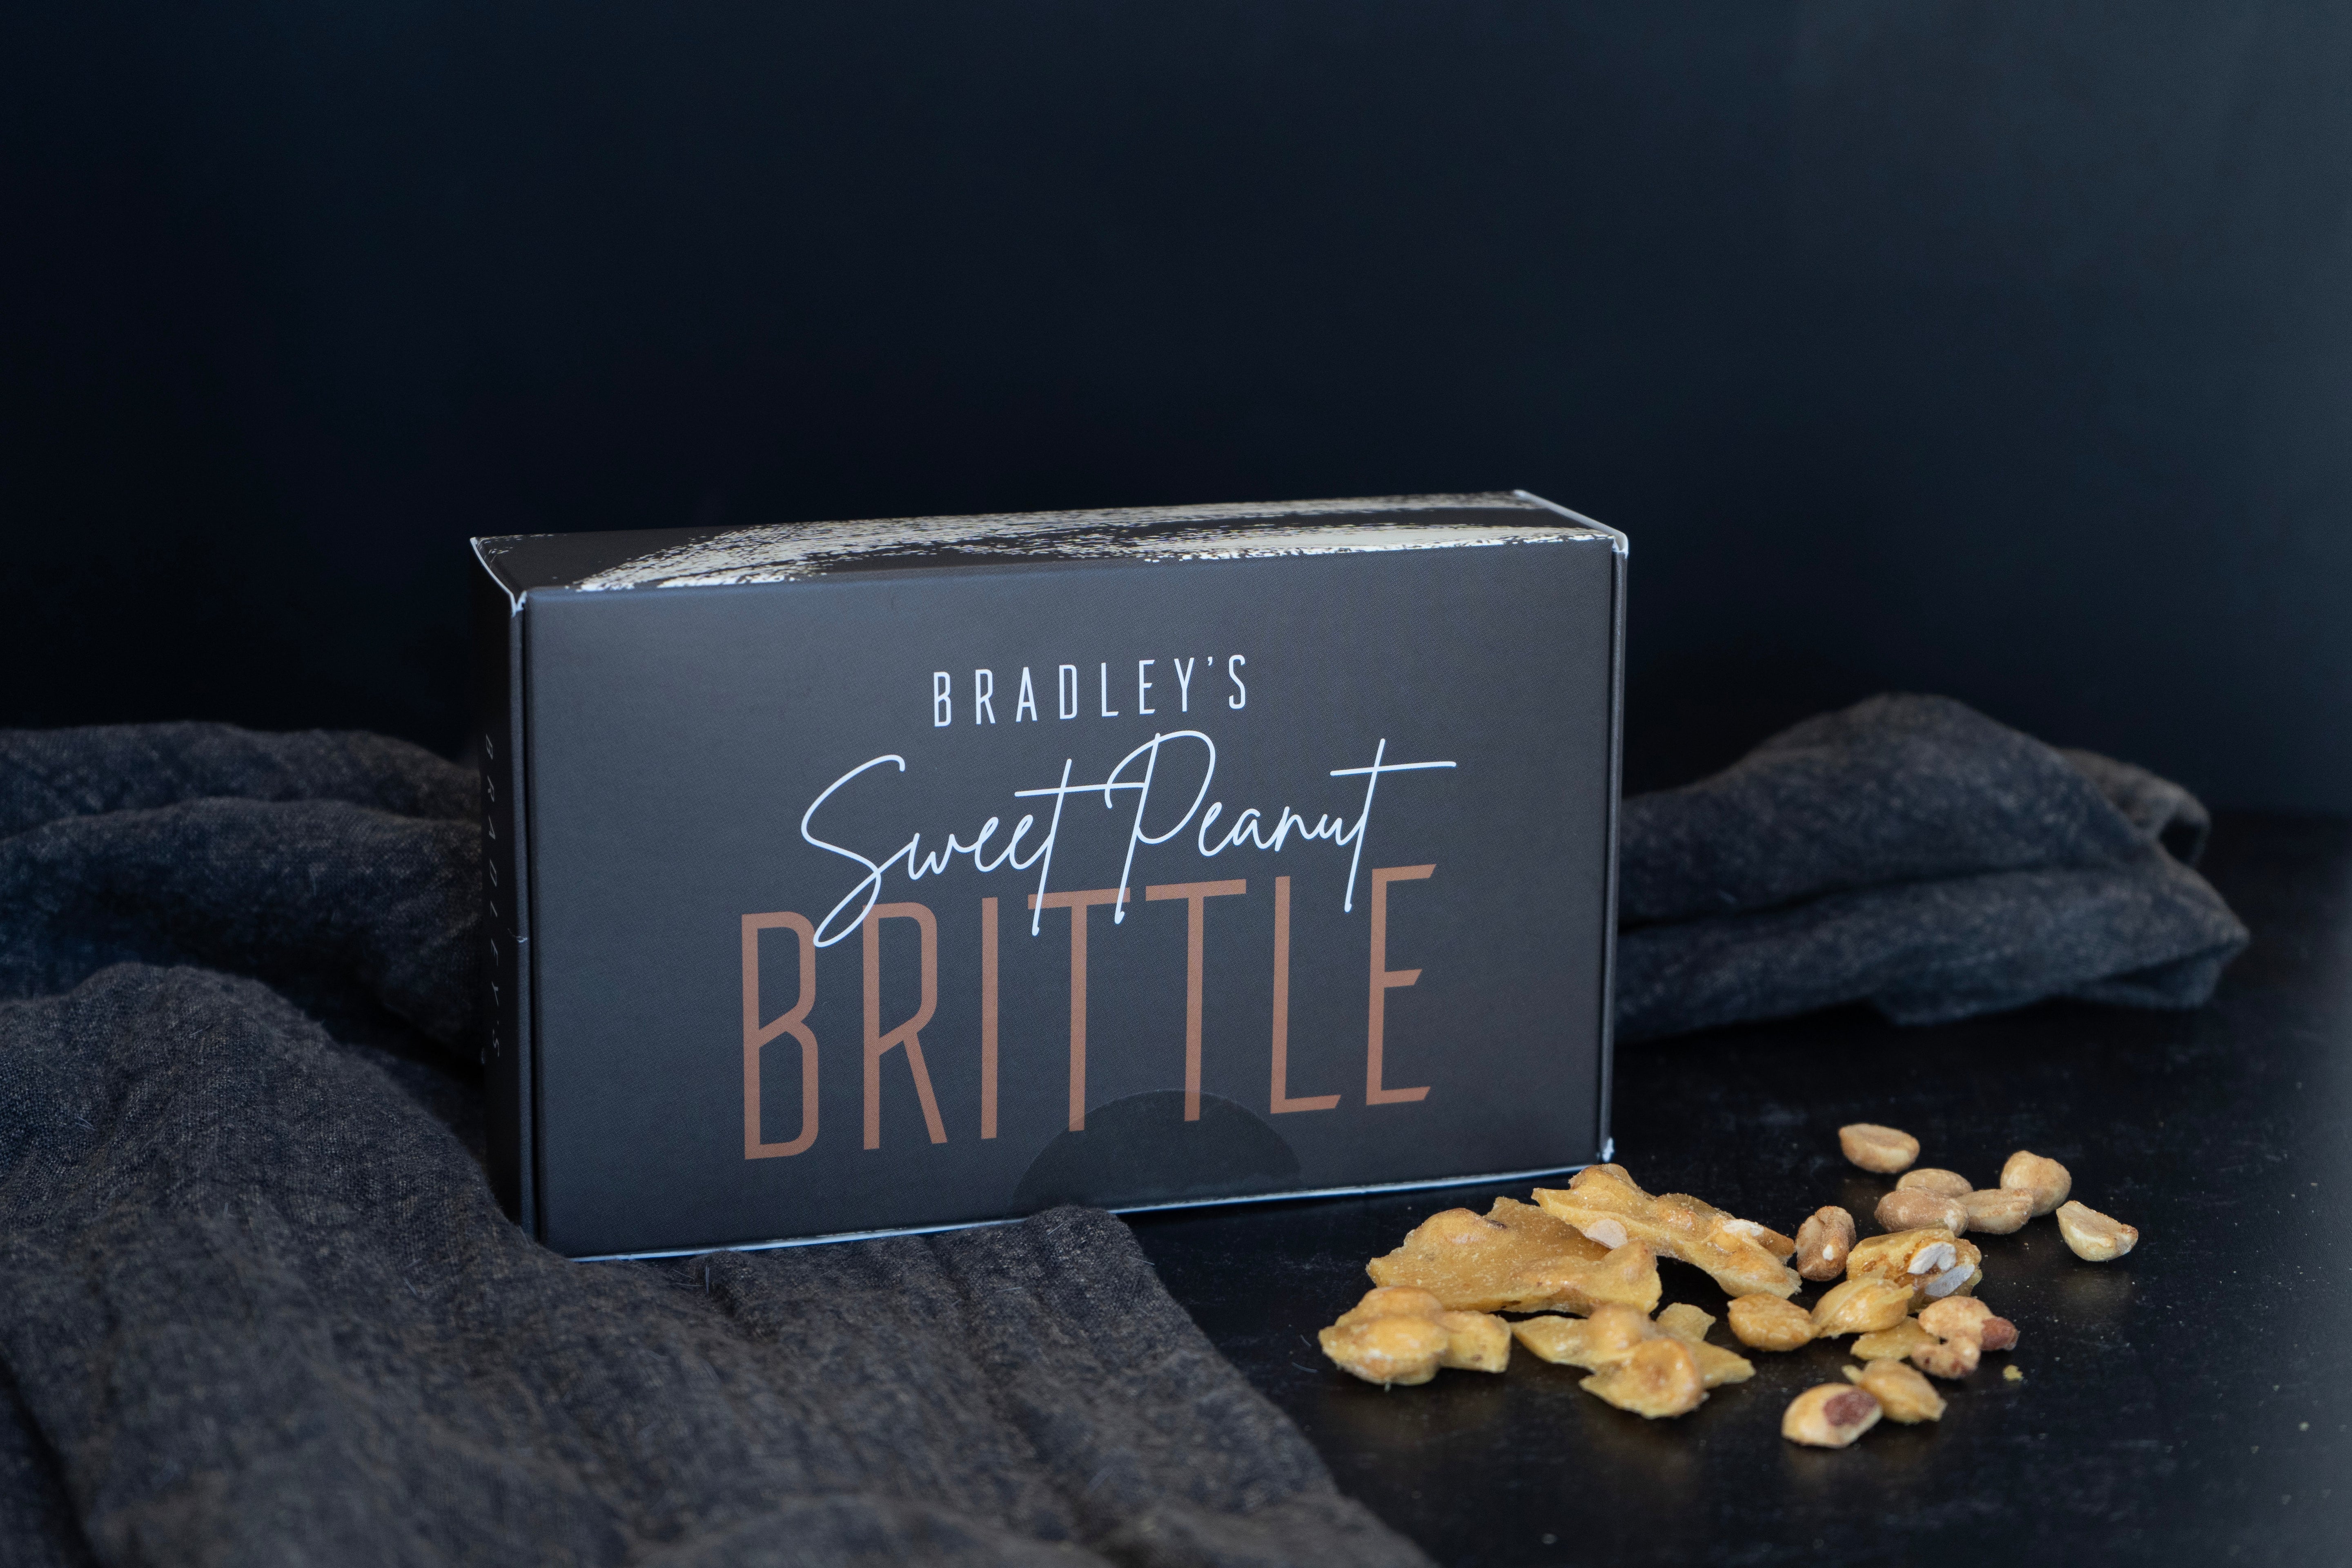 Sweet Peanut Brittle